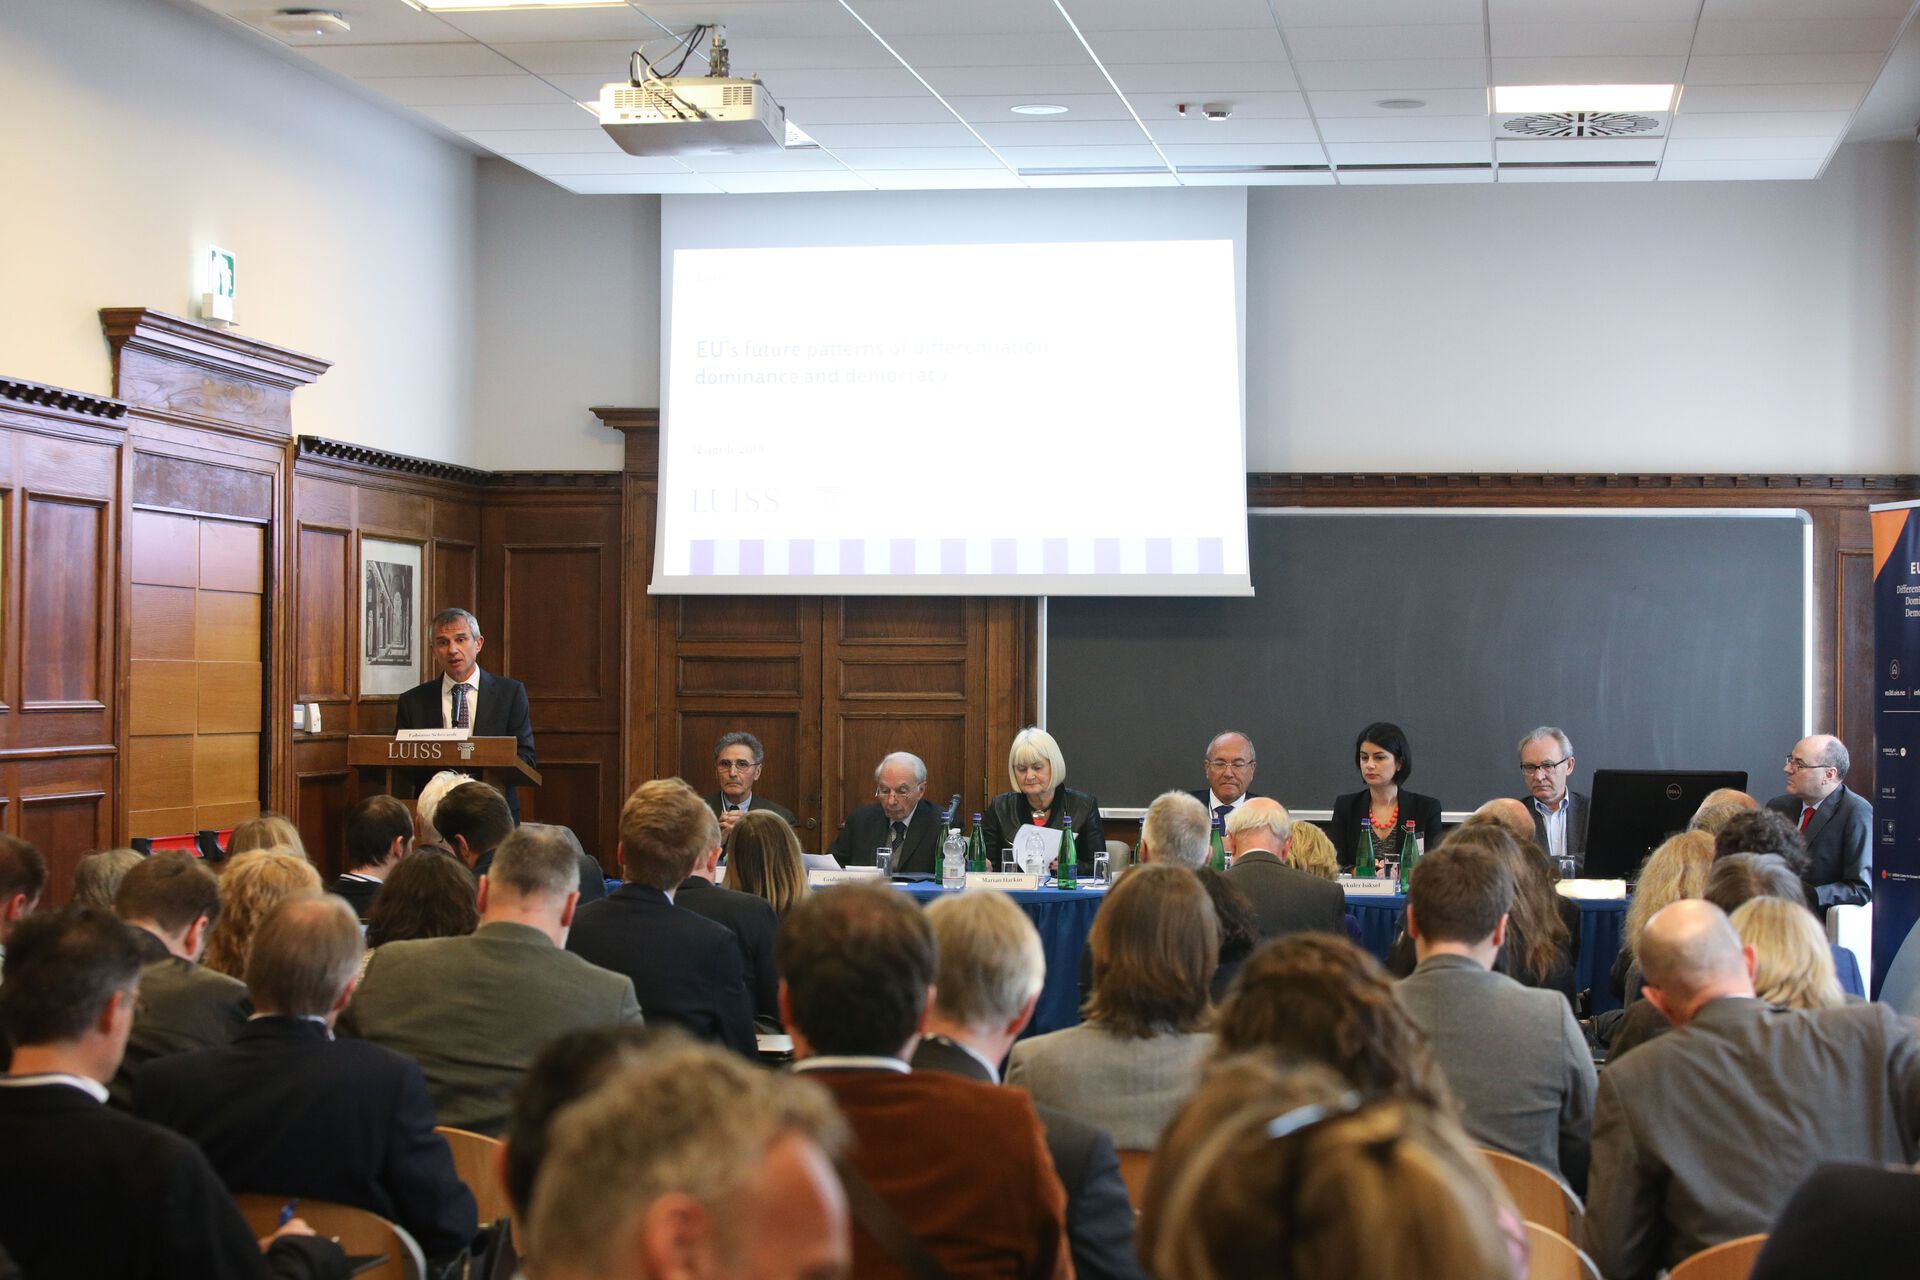 Panel debate on the future of Europe. From left to right:&amp;#160;Giovanni Orsina, Sergio Fabbrini, Giuliano Amato, Marian Harkin, Jean-Claude Piris, Turkuler Isiksel, Yves Mény and&amp;#160;Fabiano Schivardi.&amp;#160;